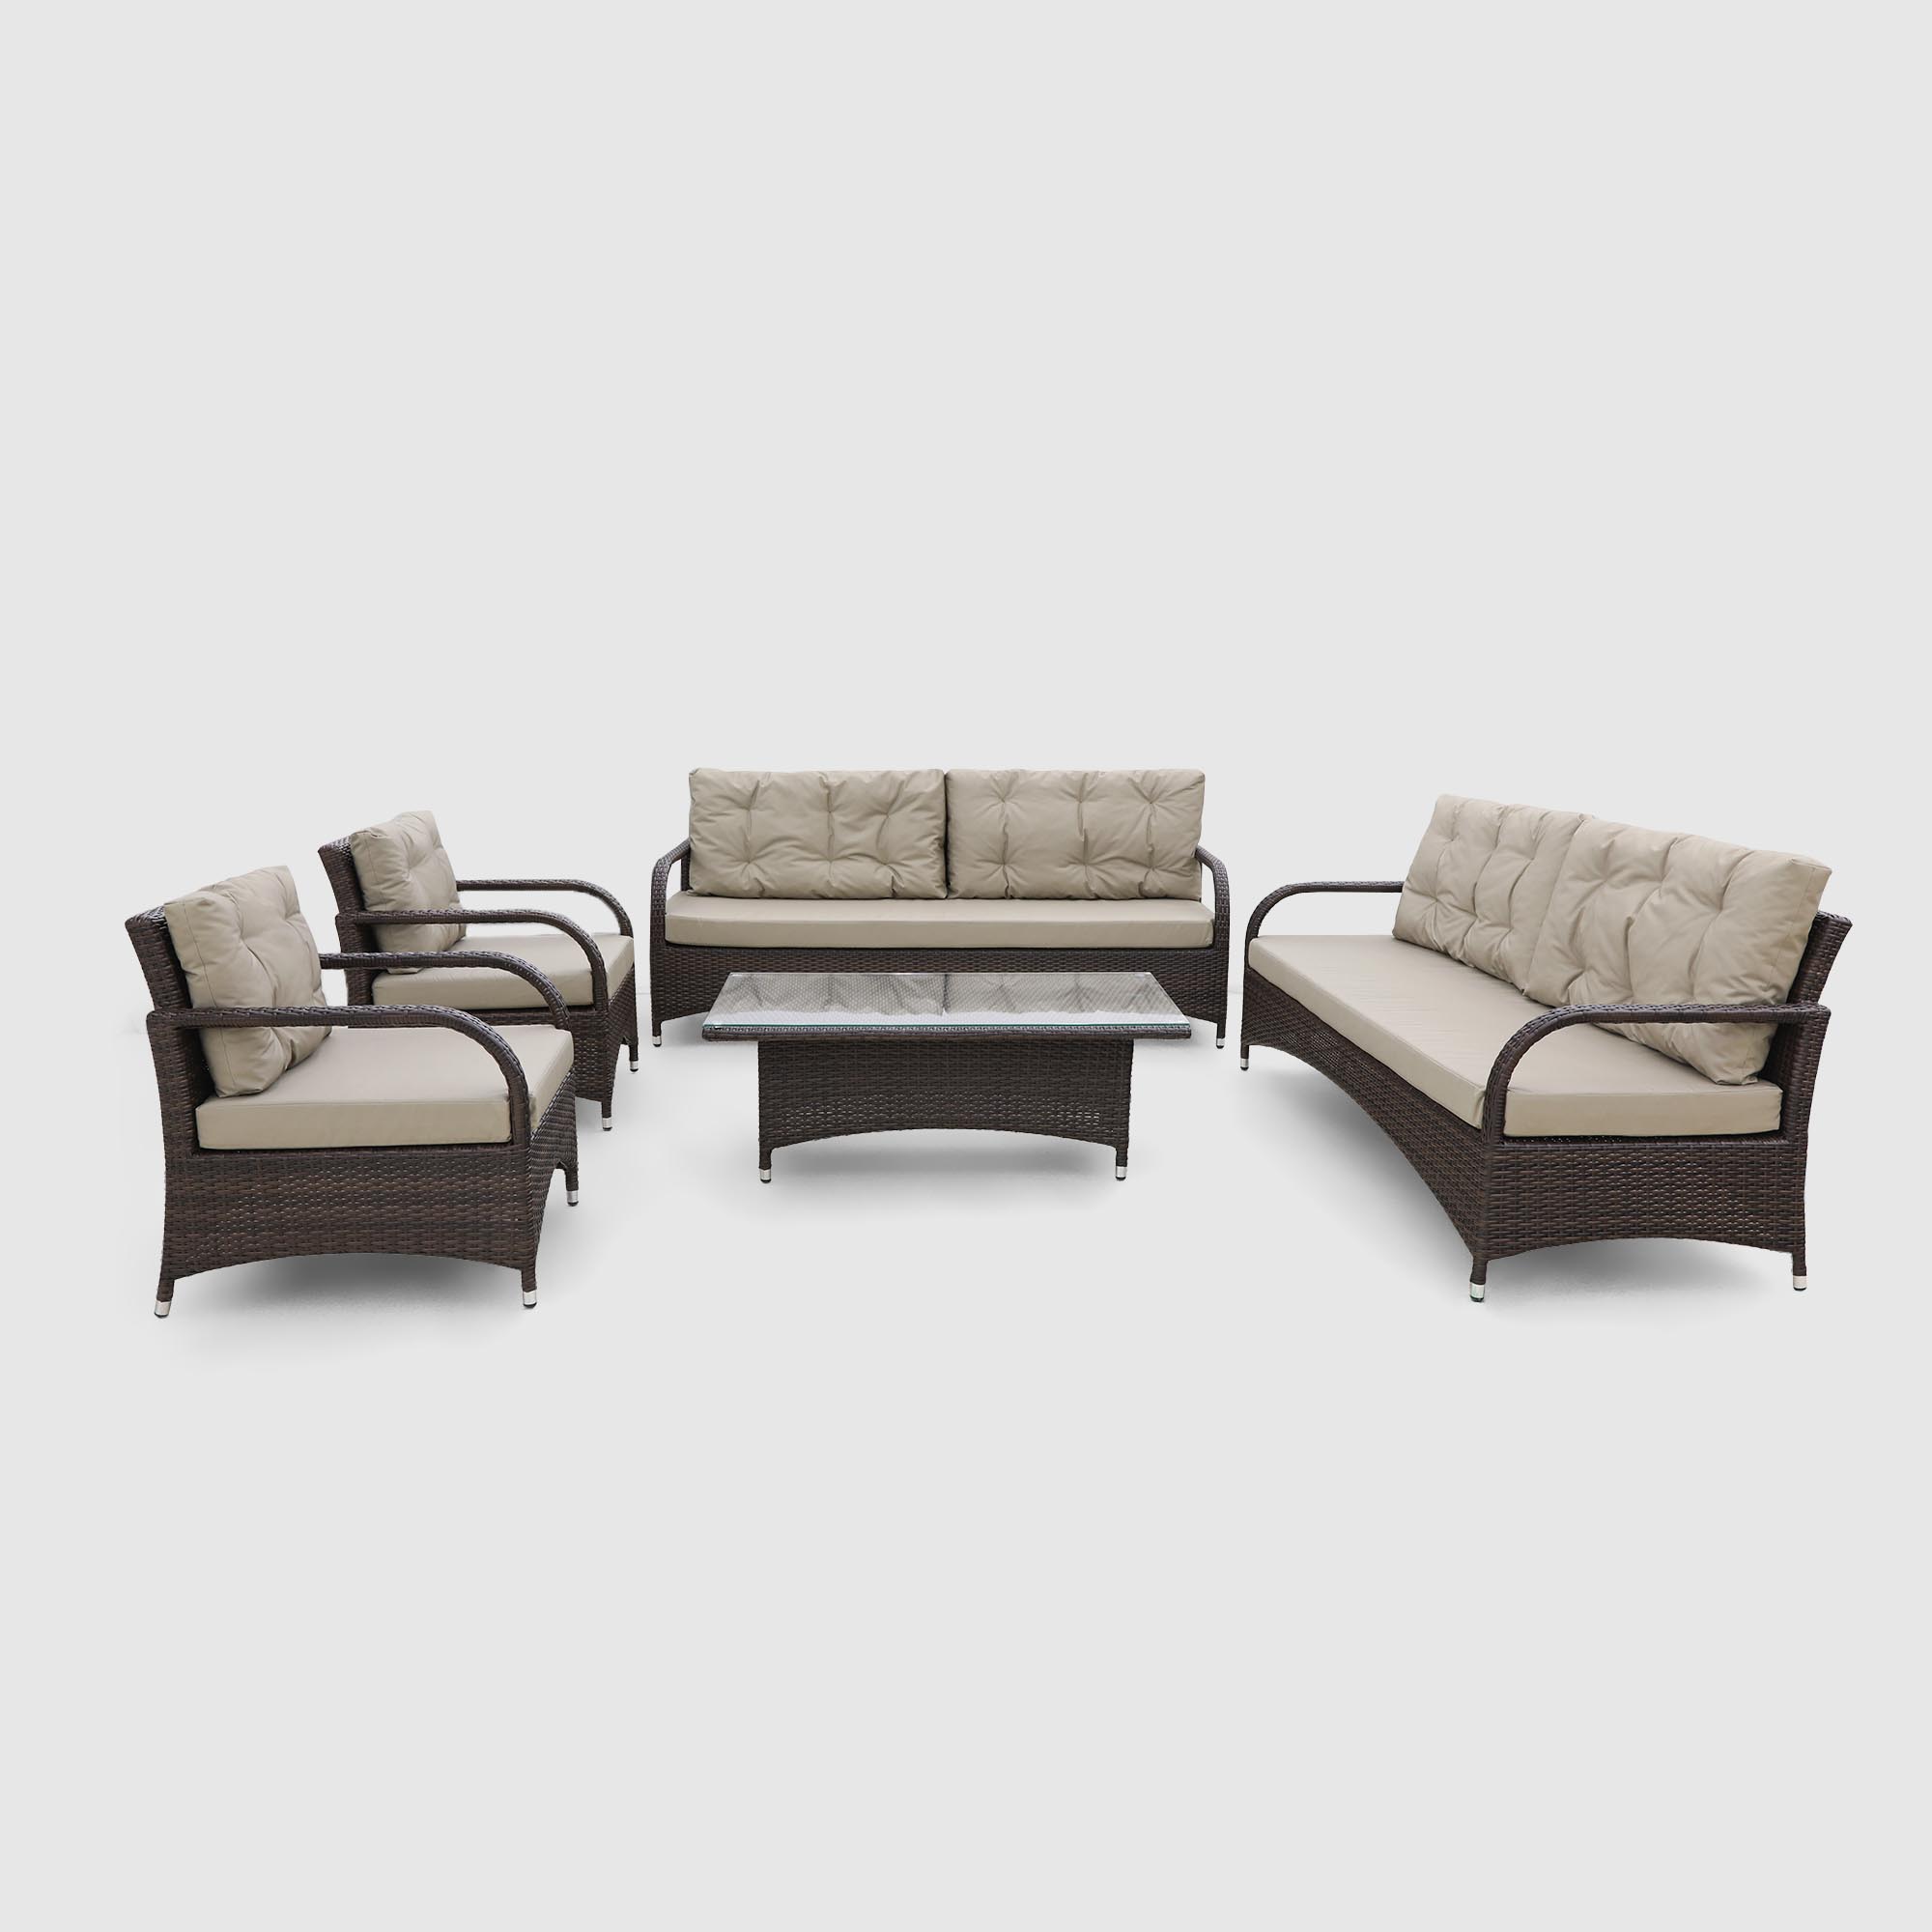 Комплект мебели Ns Rattan Family коричневый с бежевым 5 предметов комплект мебели ns rattan casual 7 предметов